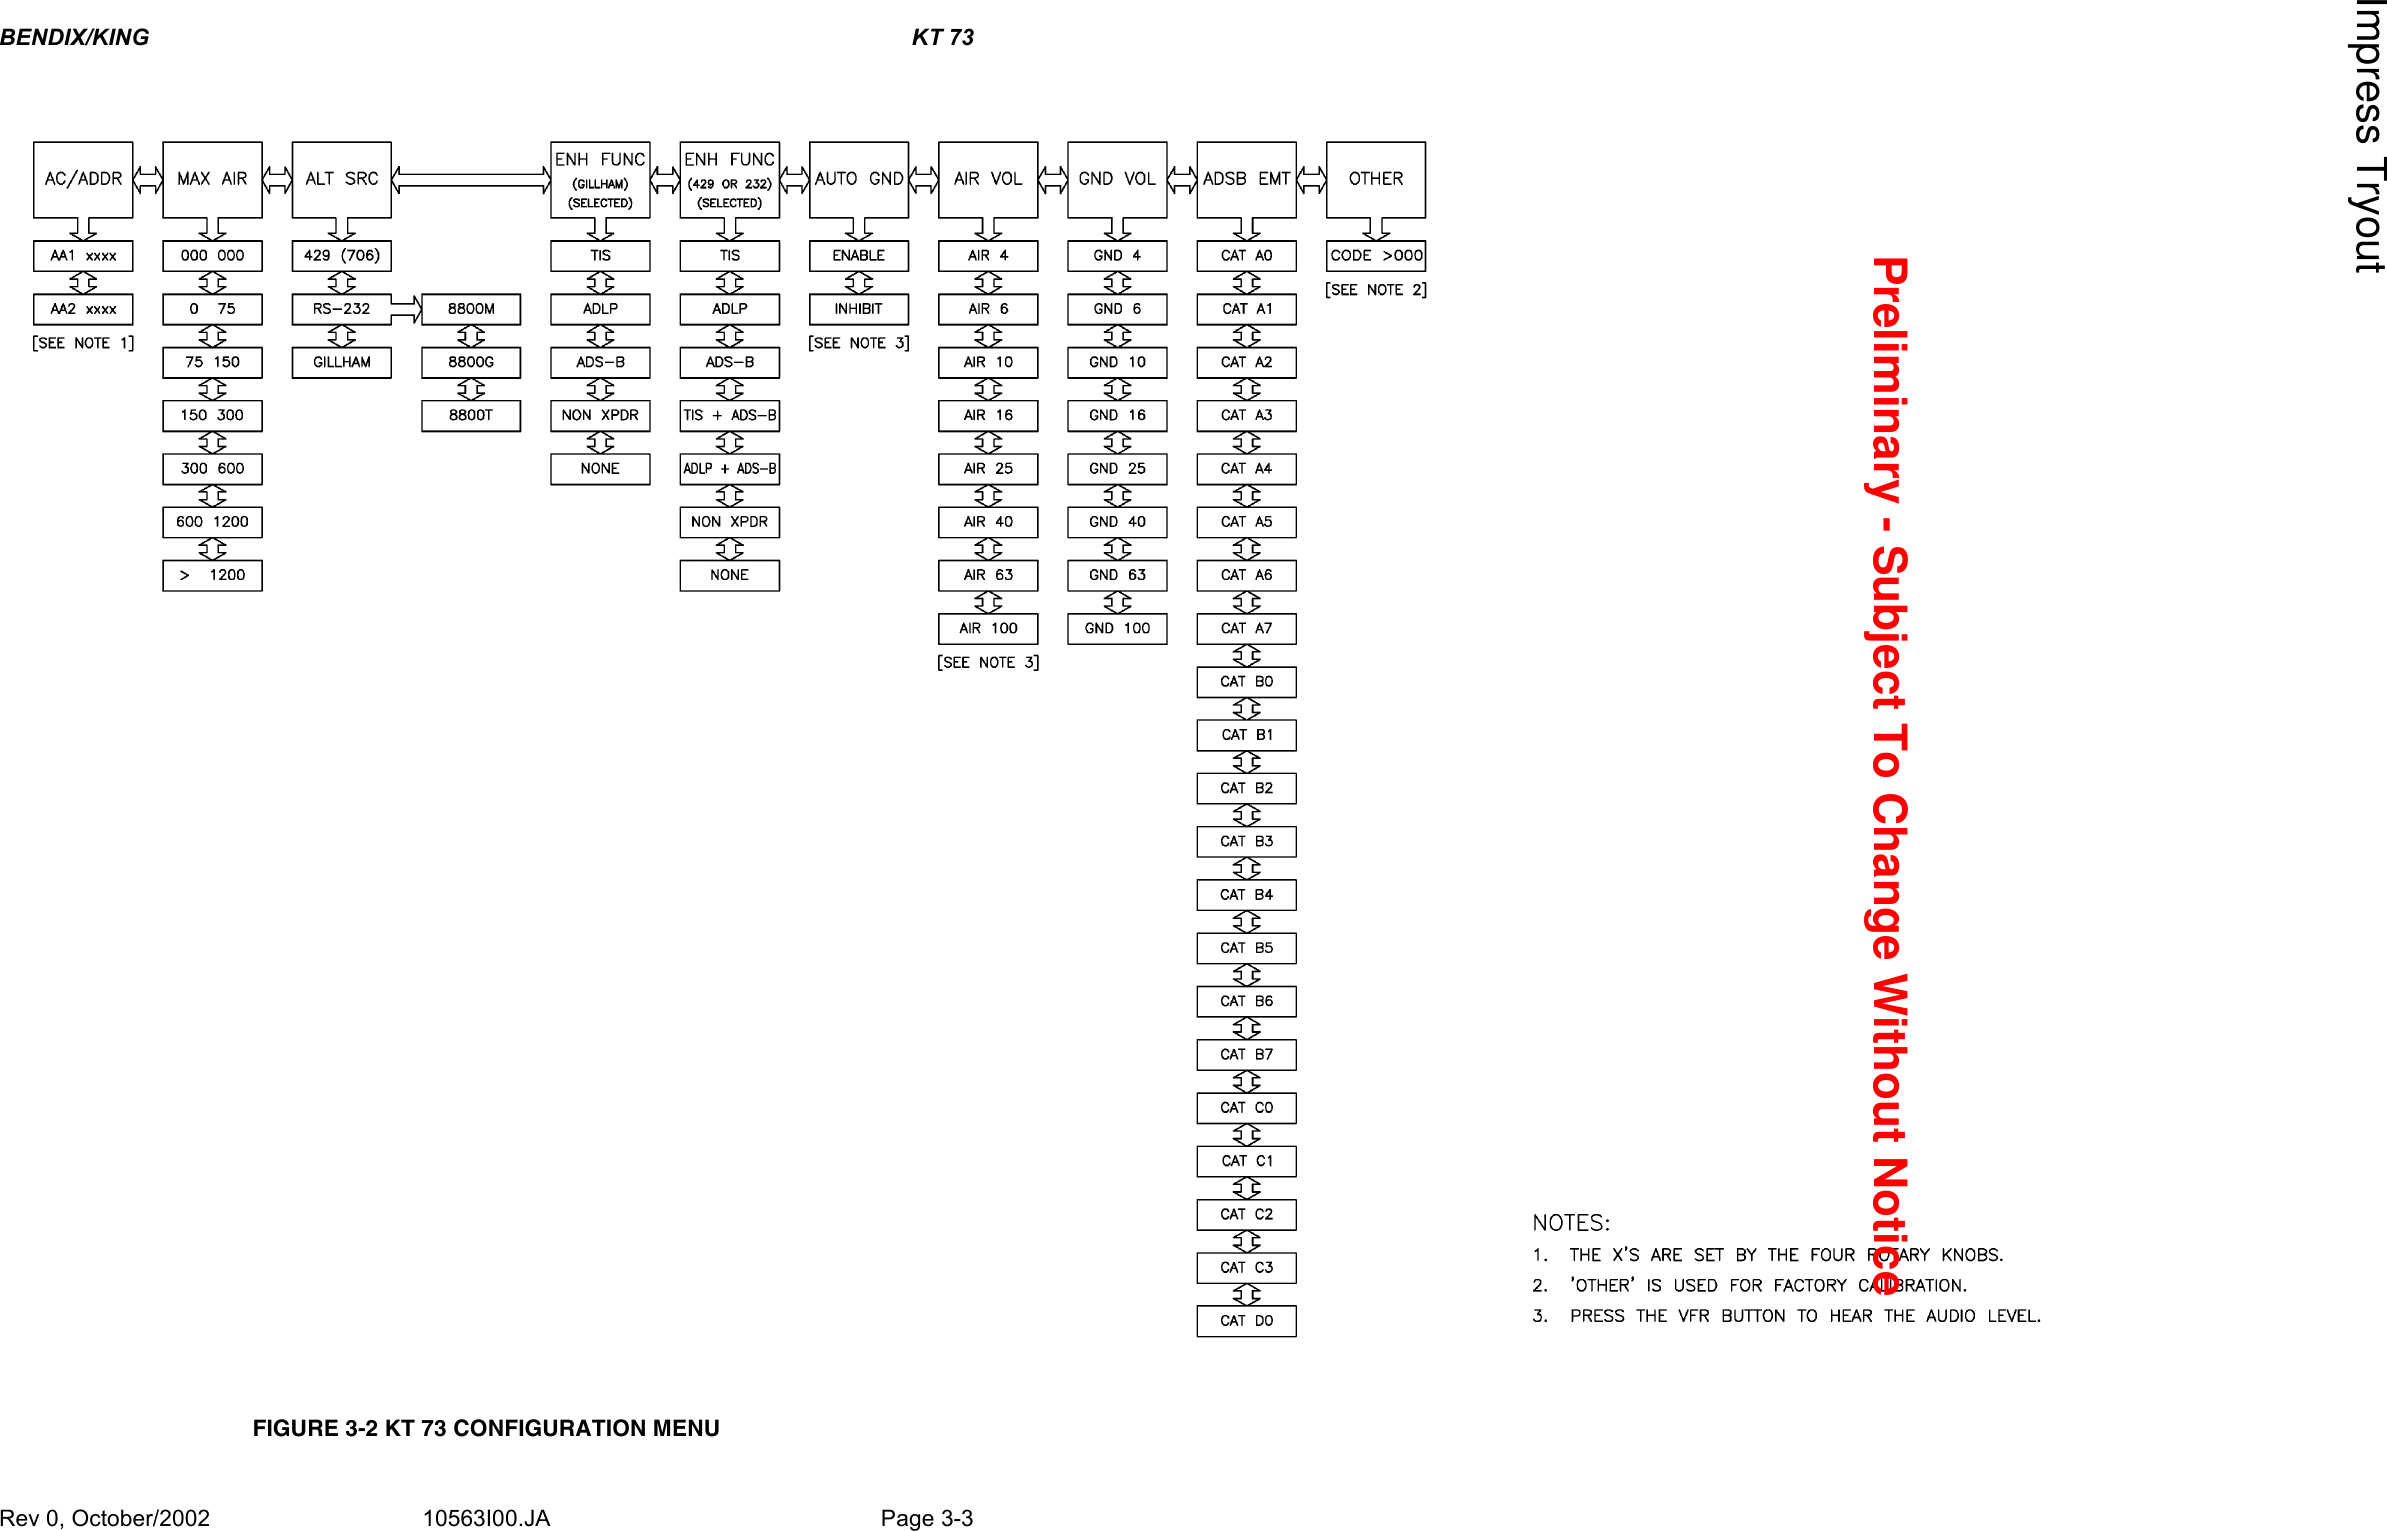 Page 75 of Honeywell KT73 Mode S Transponder, KT73 User Manual 73im